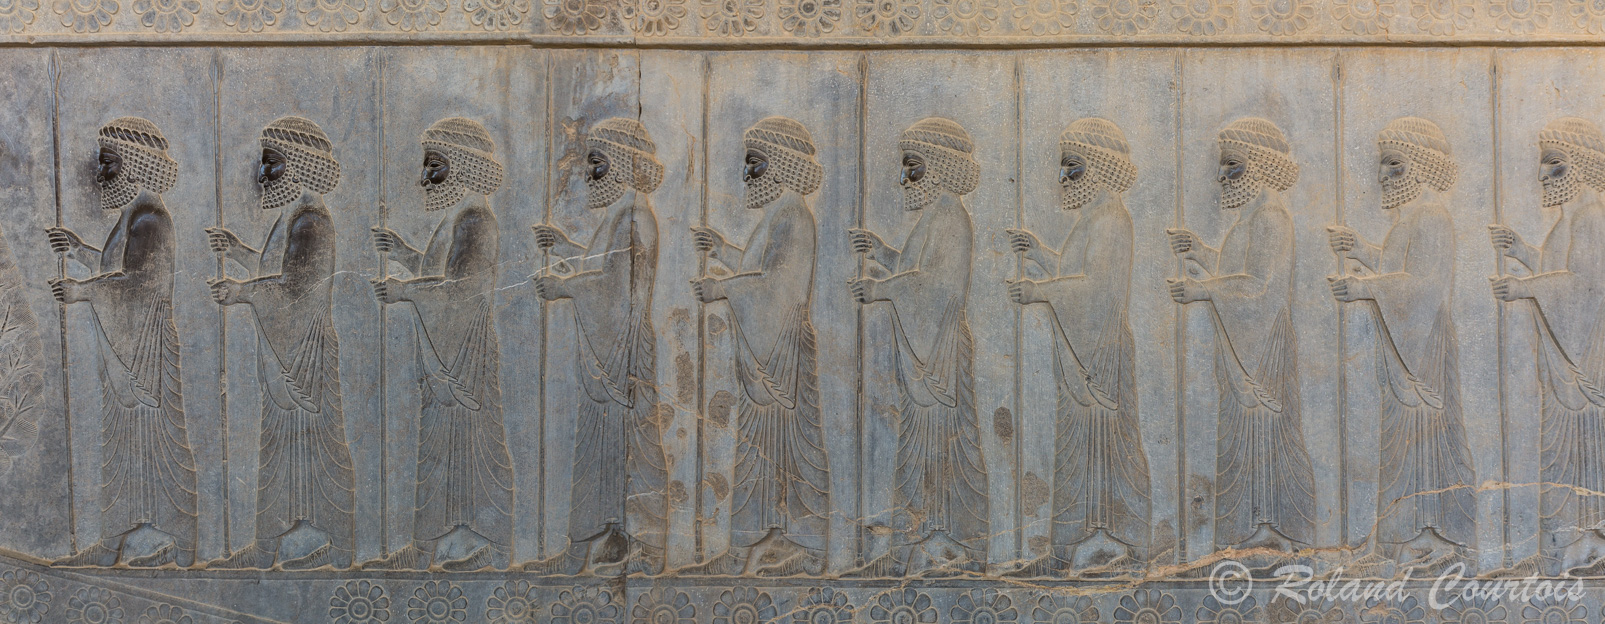 Persepolis: Frise des immortels